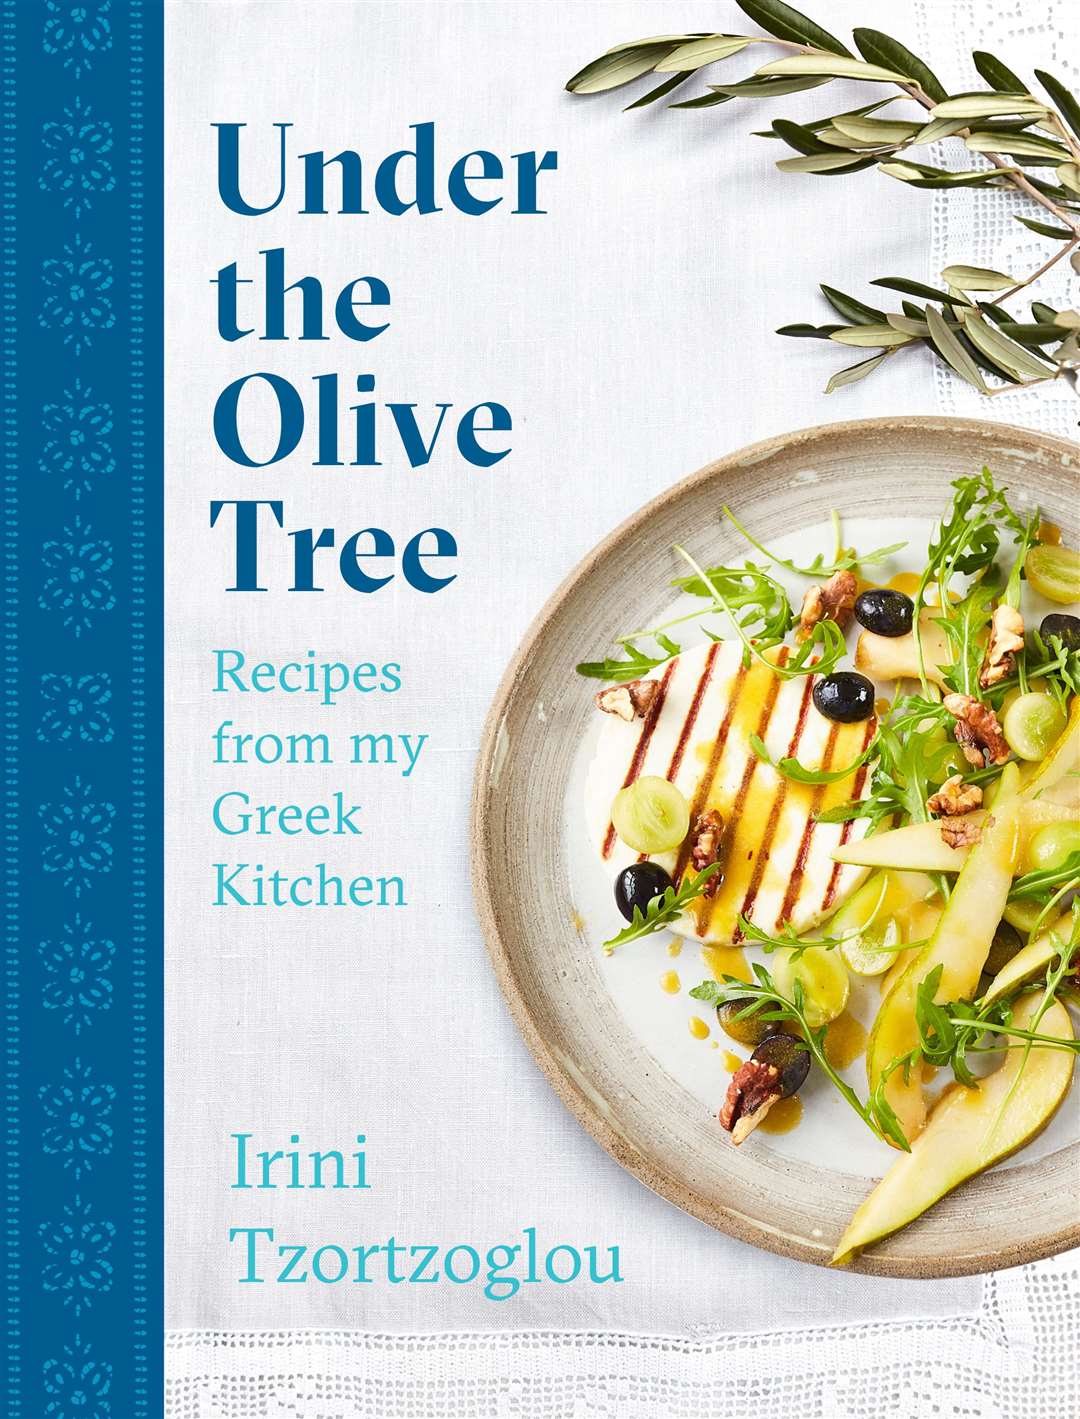 Under The Olive Tree by Irini Tzortzoglou.